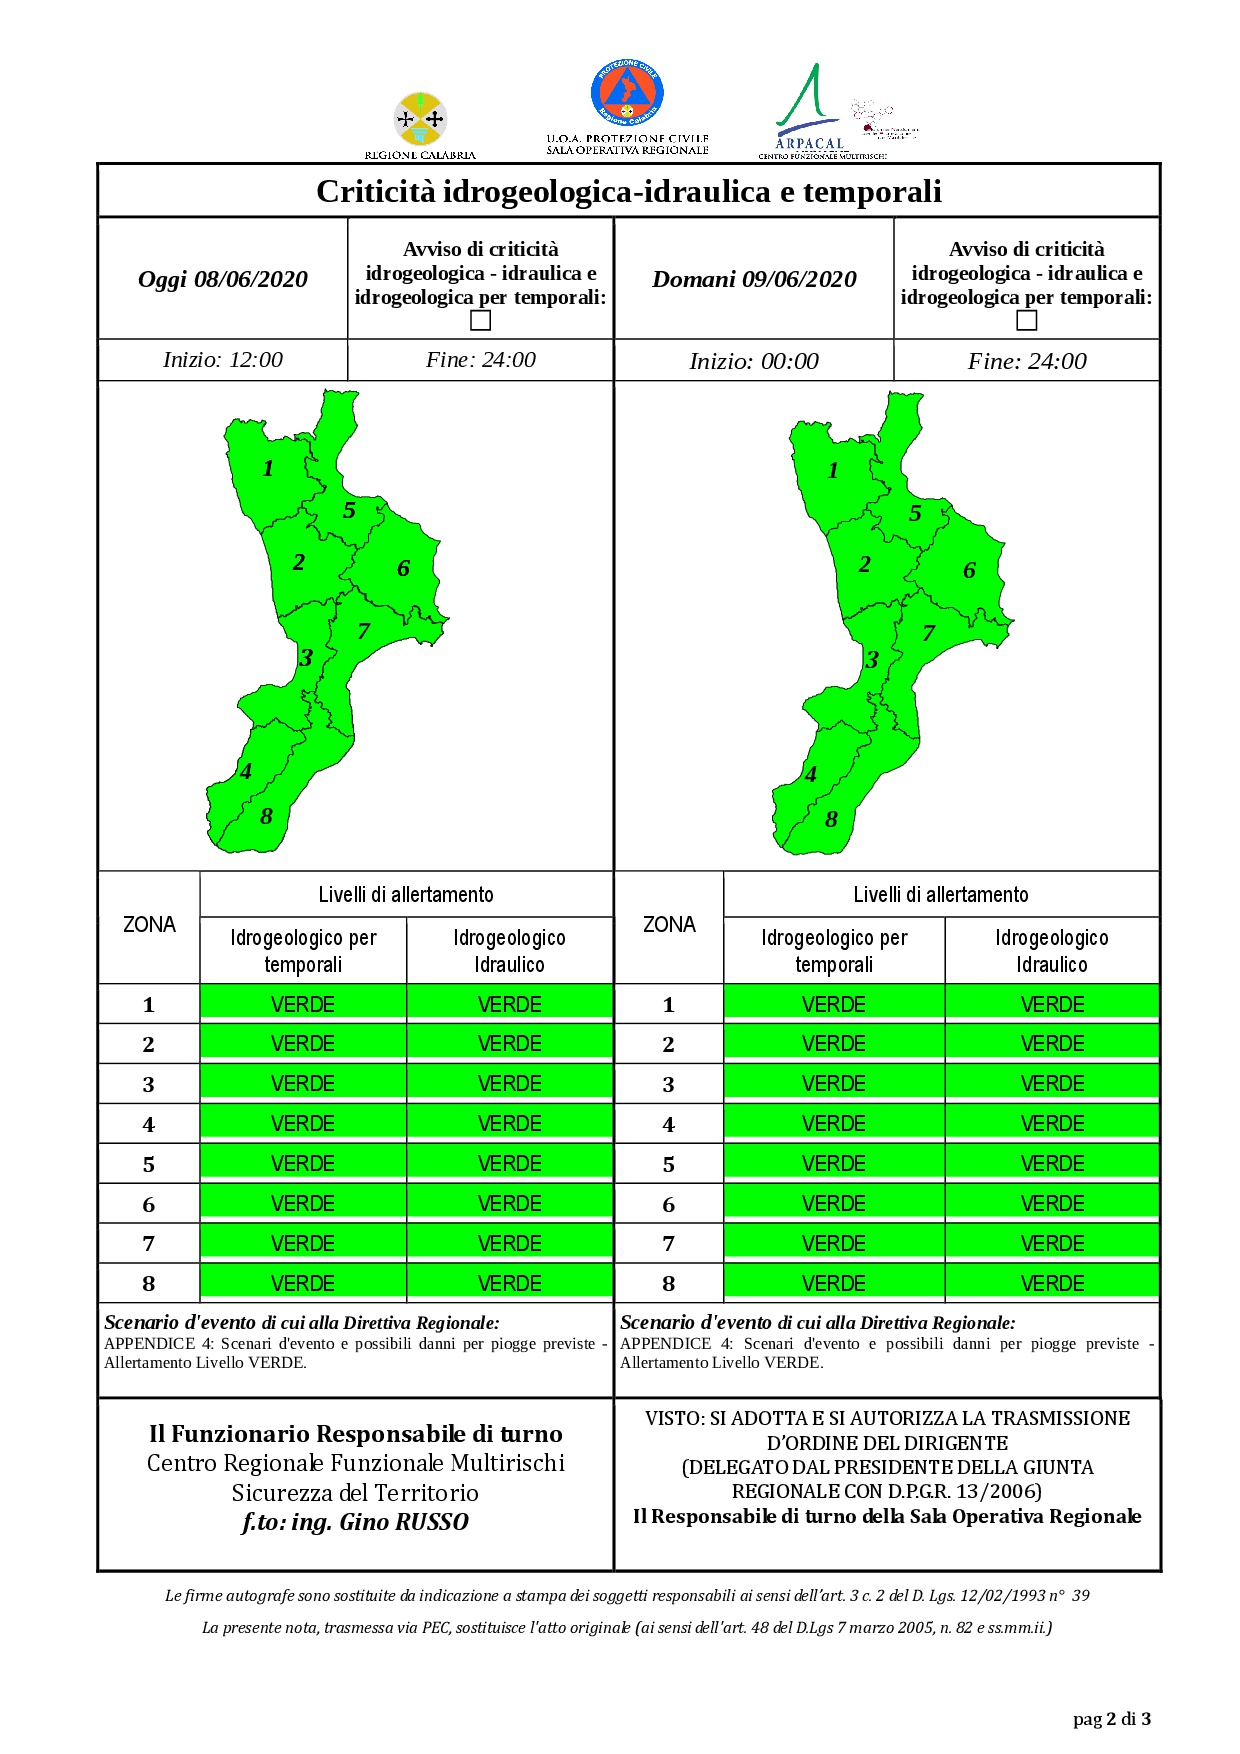 Criticità idrogeologica-idraulica e temporali in Calabria 08-06-2020